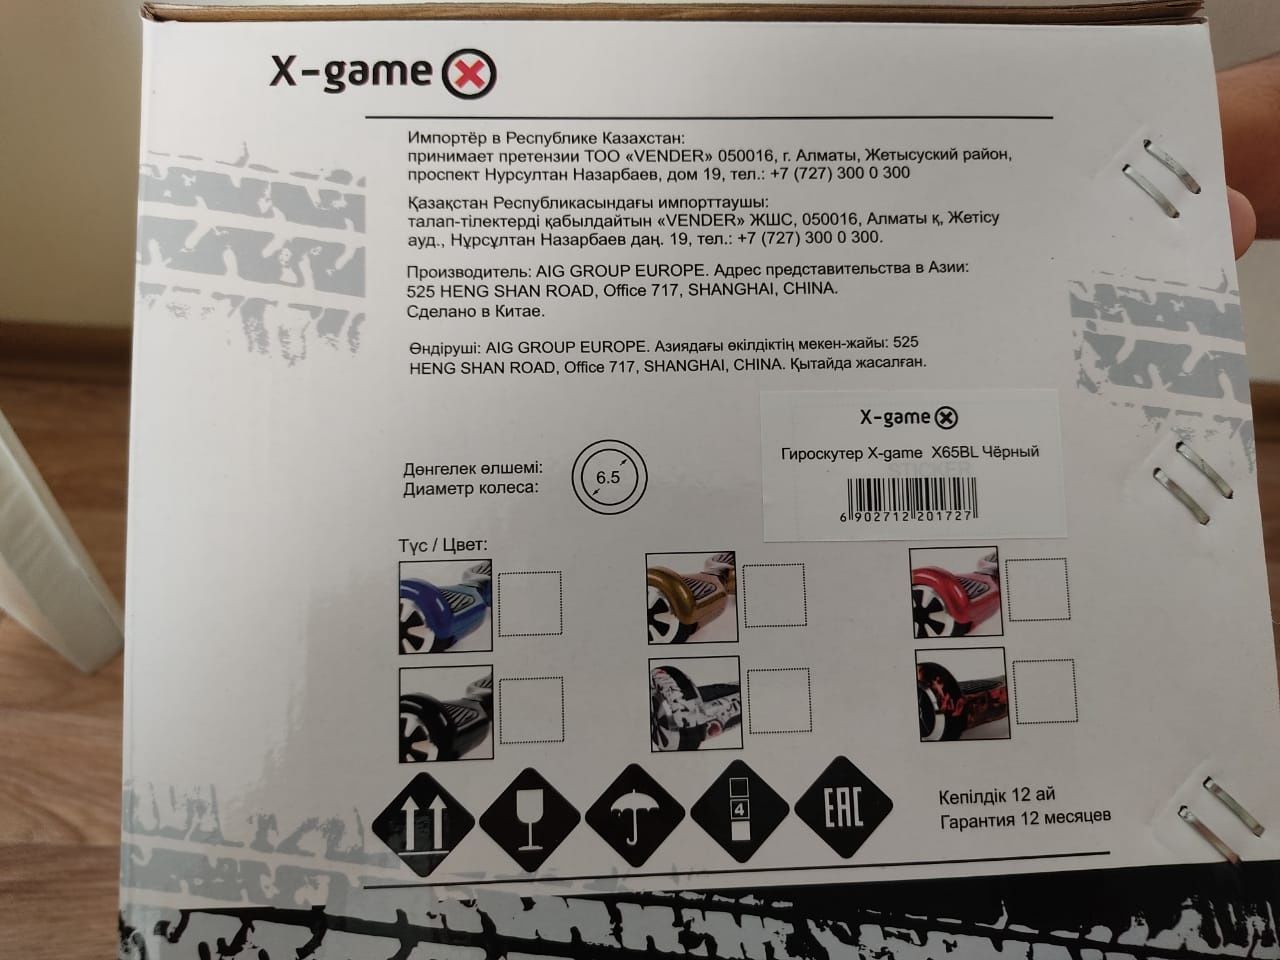 Гироскутер X-game 65 BL чёрного цвета